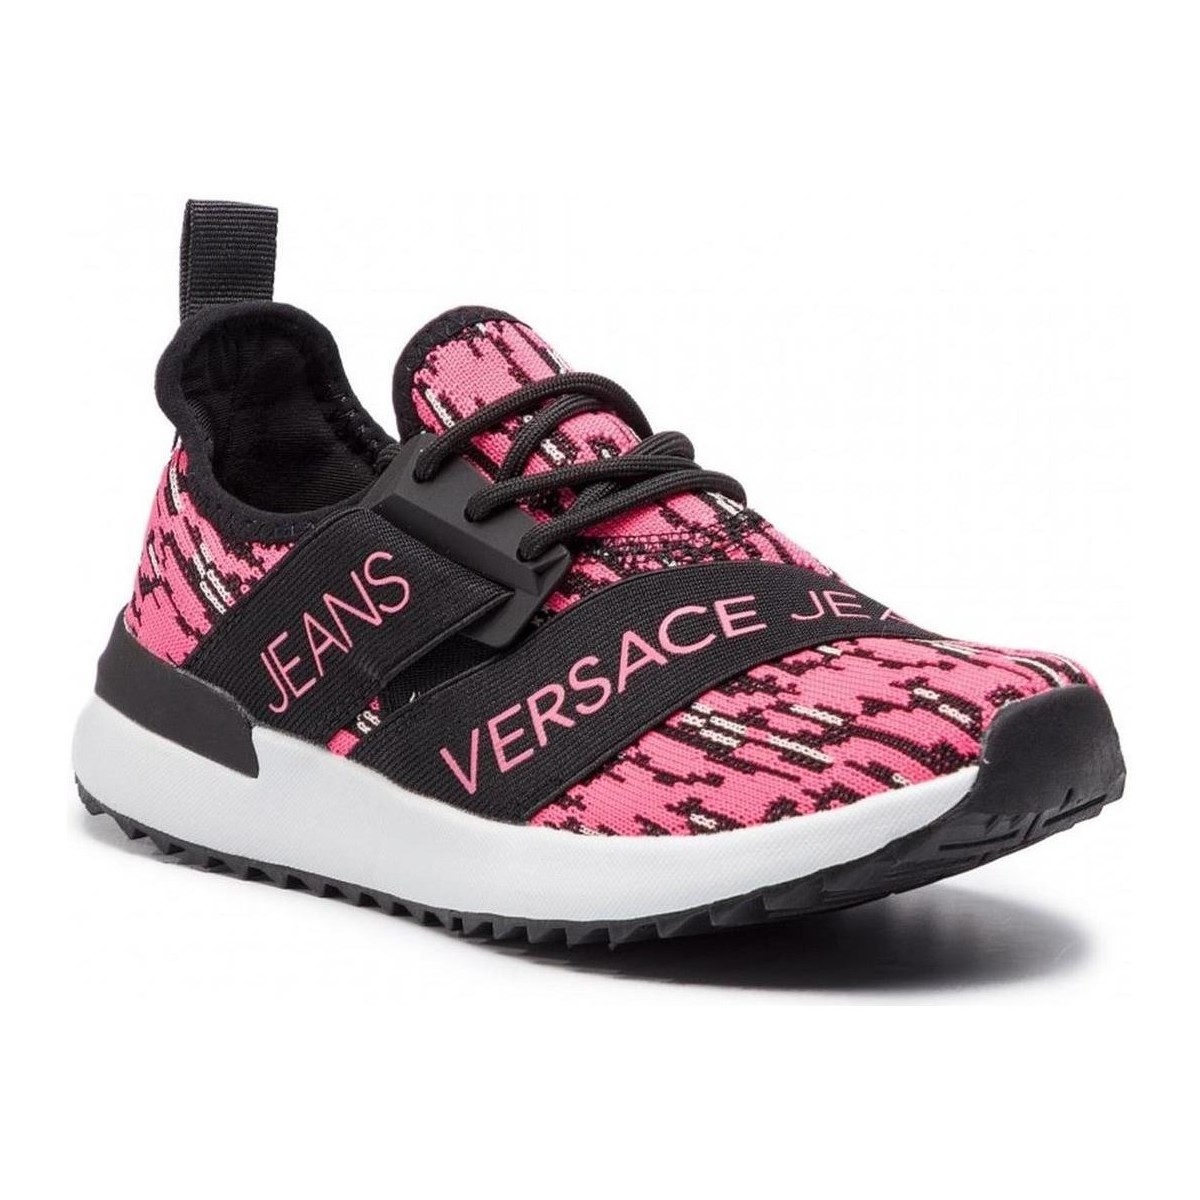 Sko Dame Sneakers Versace E0VTBSG5 Pink